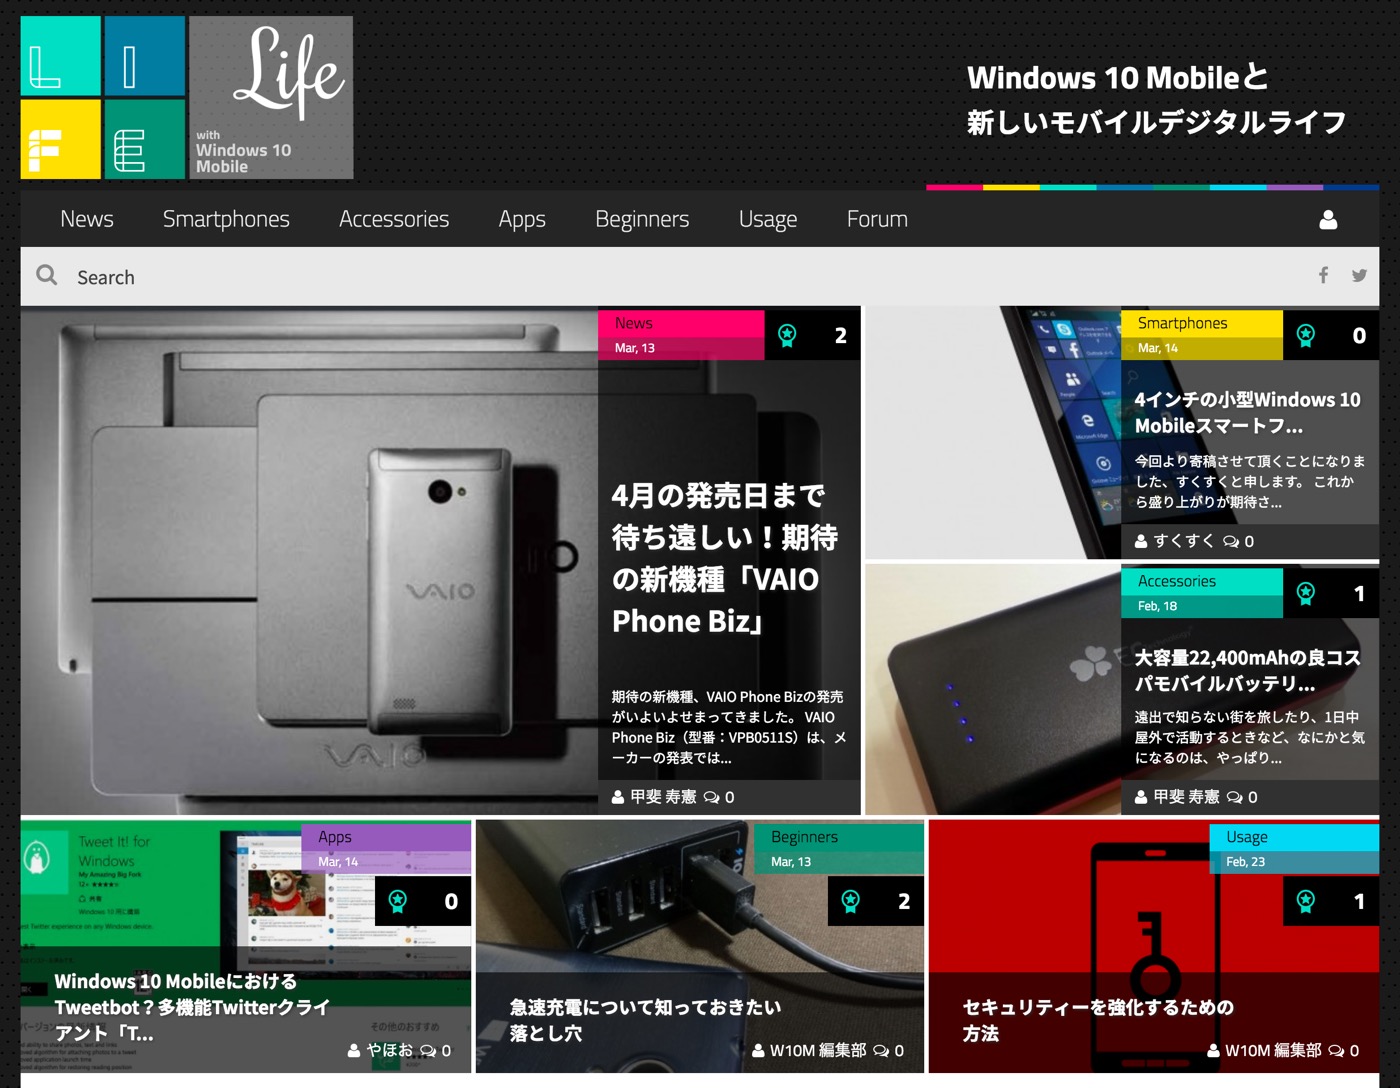 ｢Windows 10 Mobile｣関連の情報に特化したサイト｢Life with Windows 10 Mobile｣がスタート